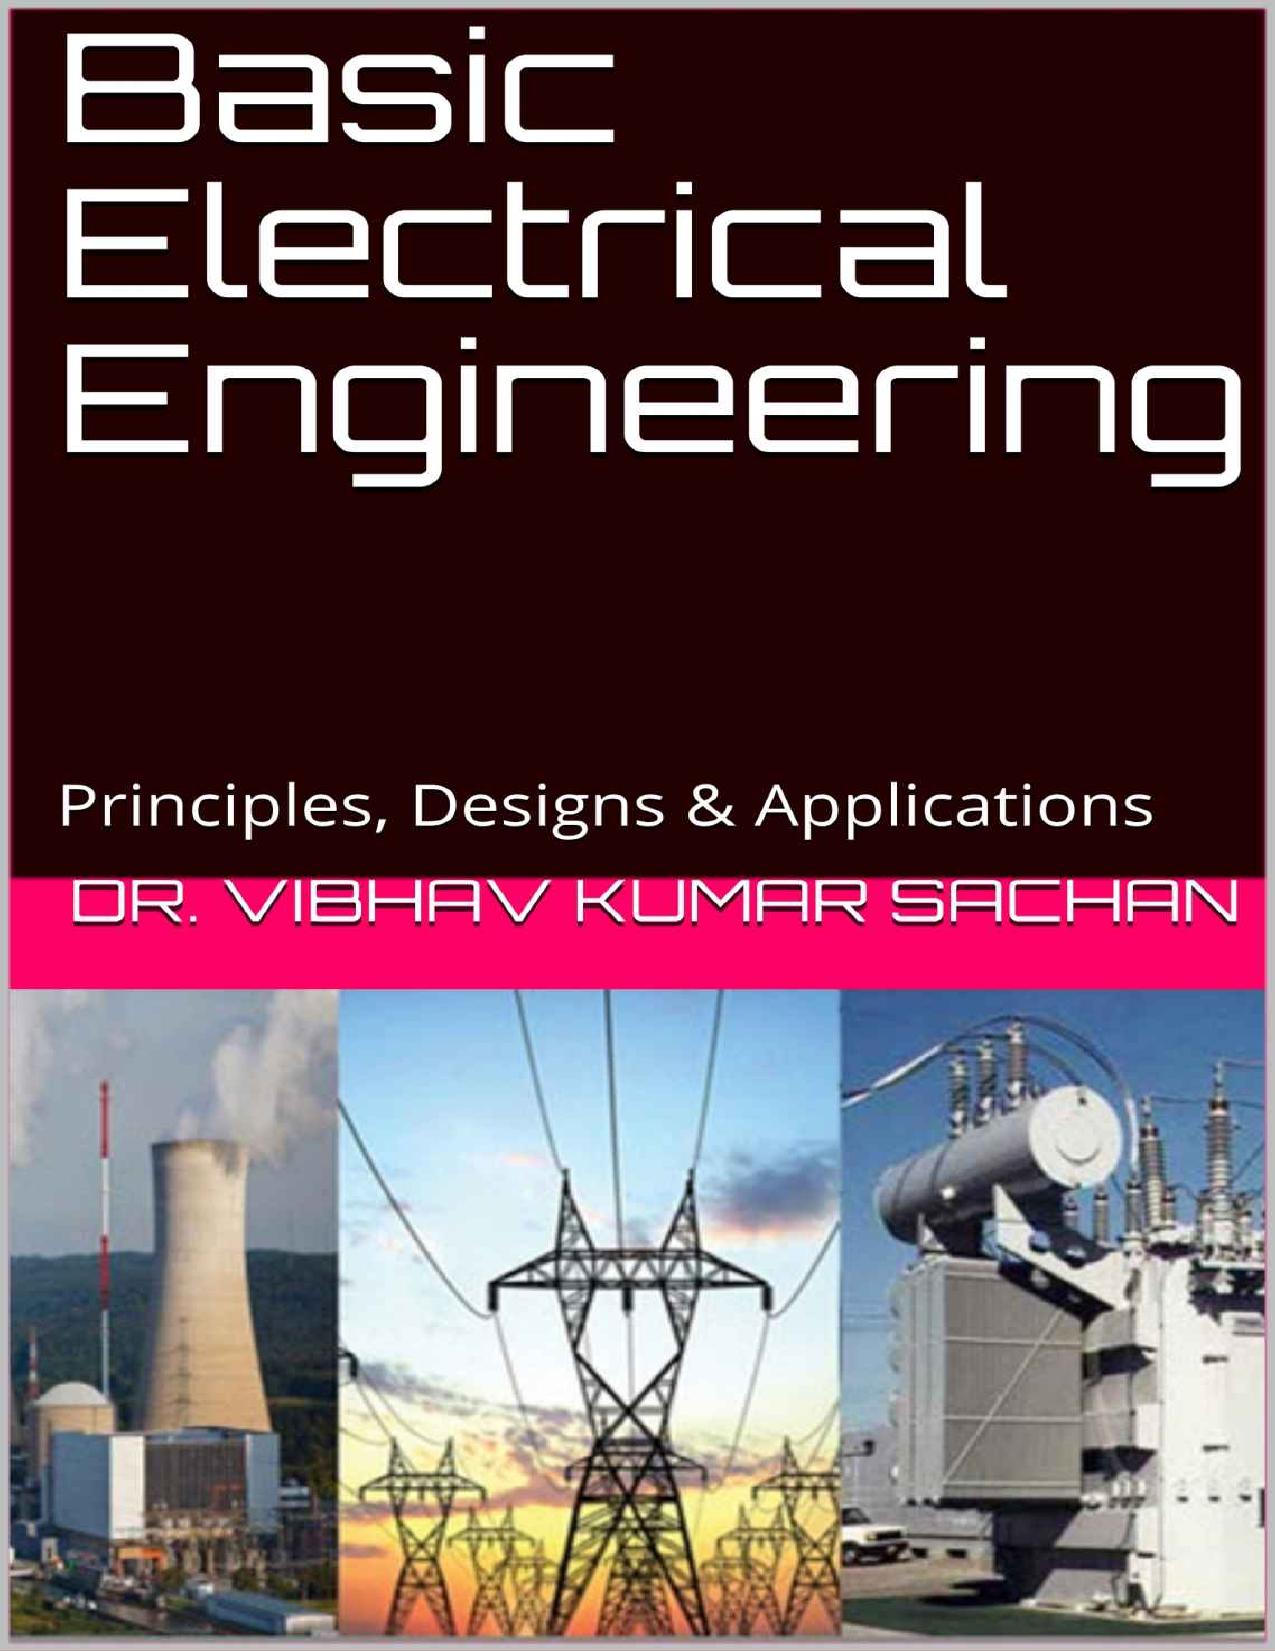 Basic Electrical Engineering: Principles, Designs & Applications (Sachan Book 19) by Dr. Vibhav Kumar Sachan